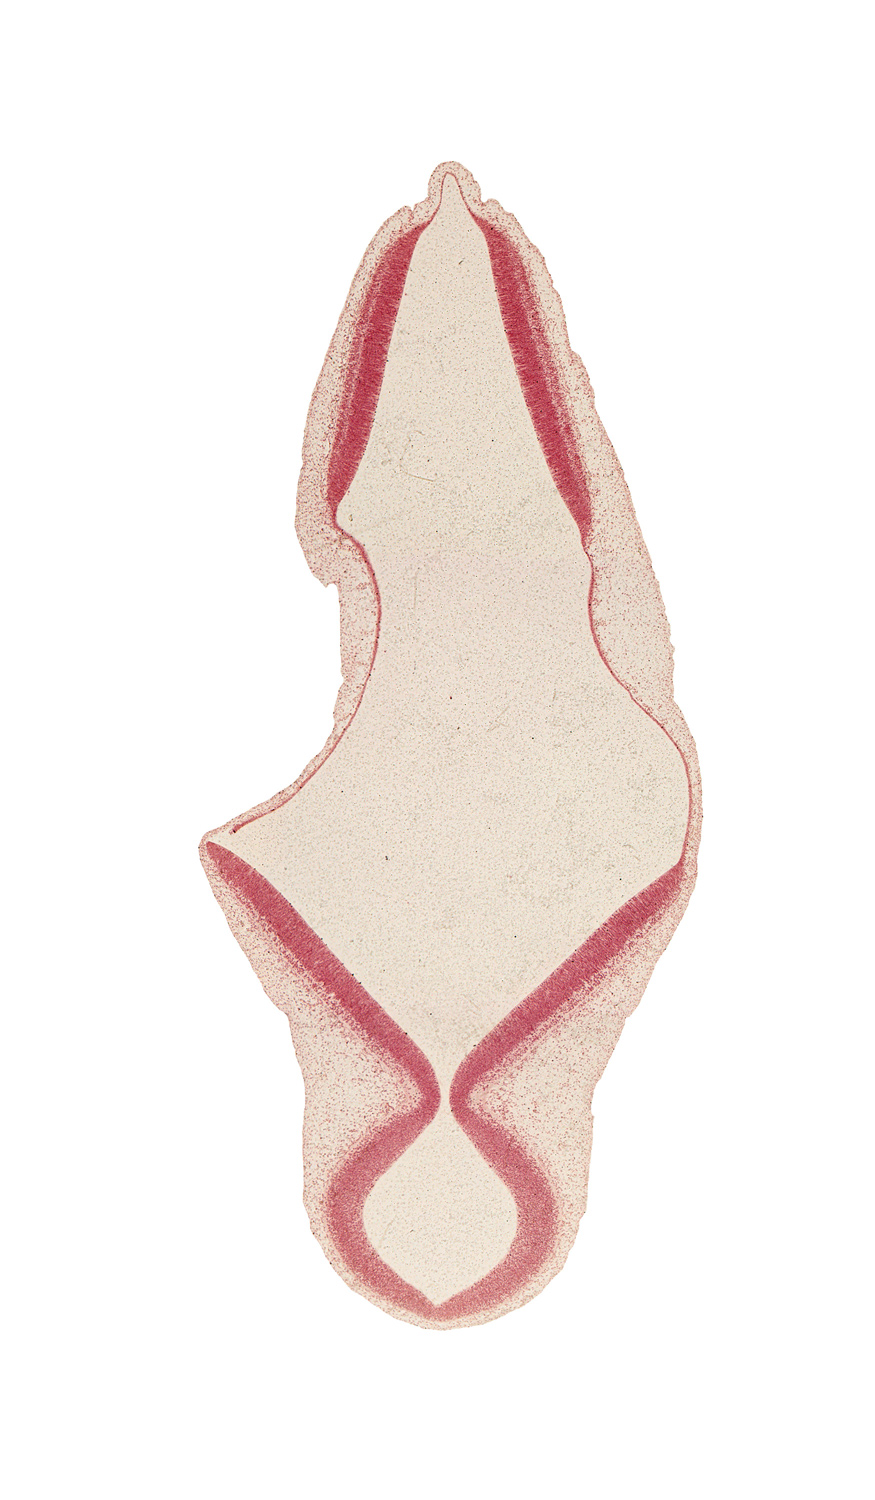 alar plate of myelencephalon, artifact separation(s), edge of isthmus of rhombencephalon, edge of junction of mesencoel and rhombencoel (fourth ventricle), isthmus of rhombencephalon, mesencephalon, mesencoel, rhombencoel (fourth ventricle), roof plate of rhombencephalon